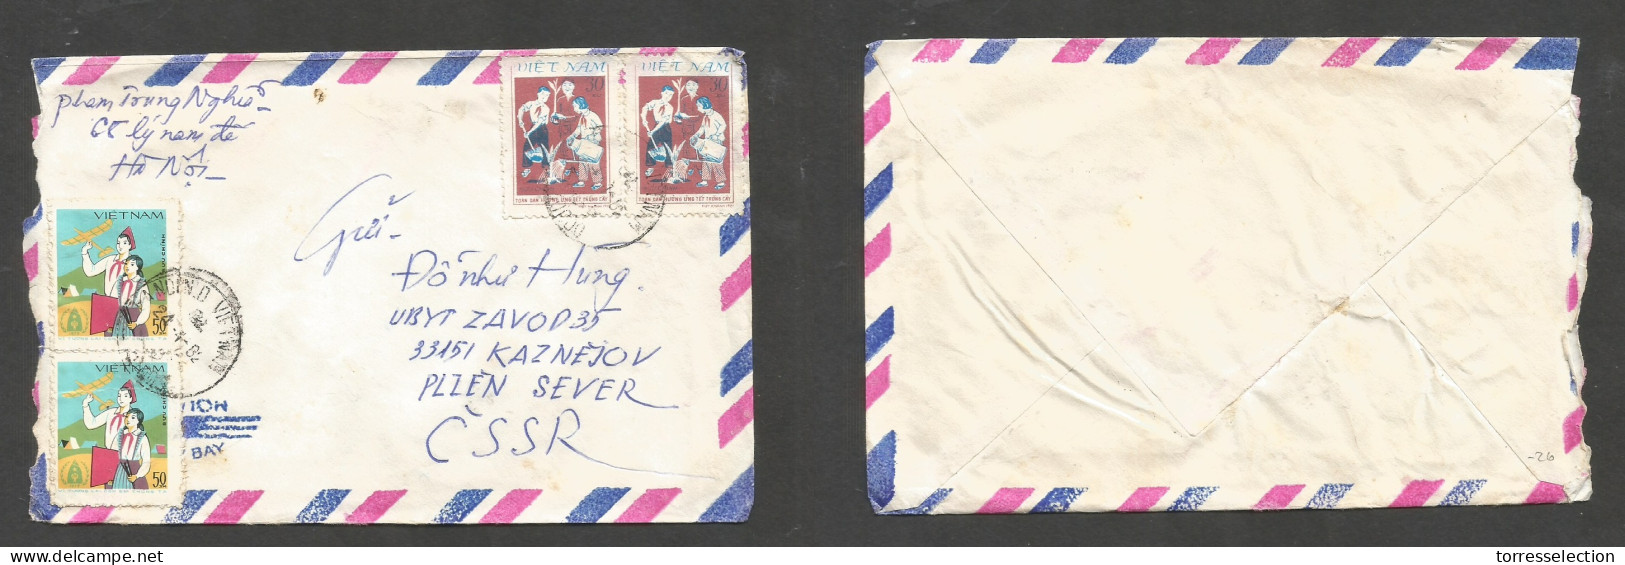 INDOCHINA. 1982 (24 Jan) North Vietnam, Hanoi - Czech Republic, Kaznejor. Air Multifkd Envelope. Adoctrinations Issue, T - Altri - Asia